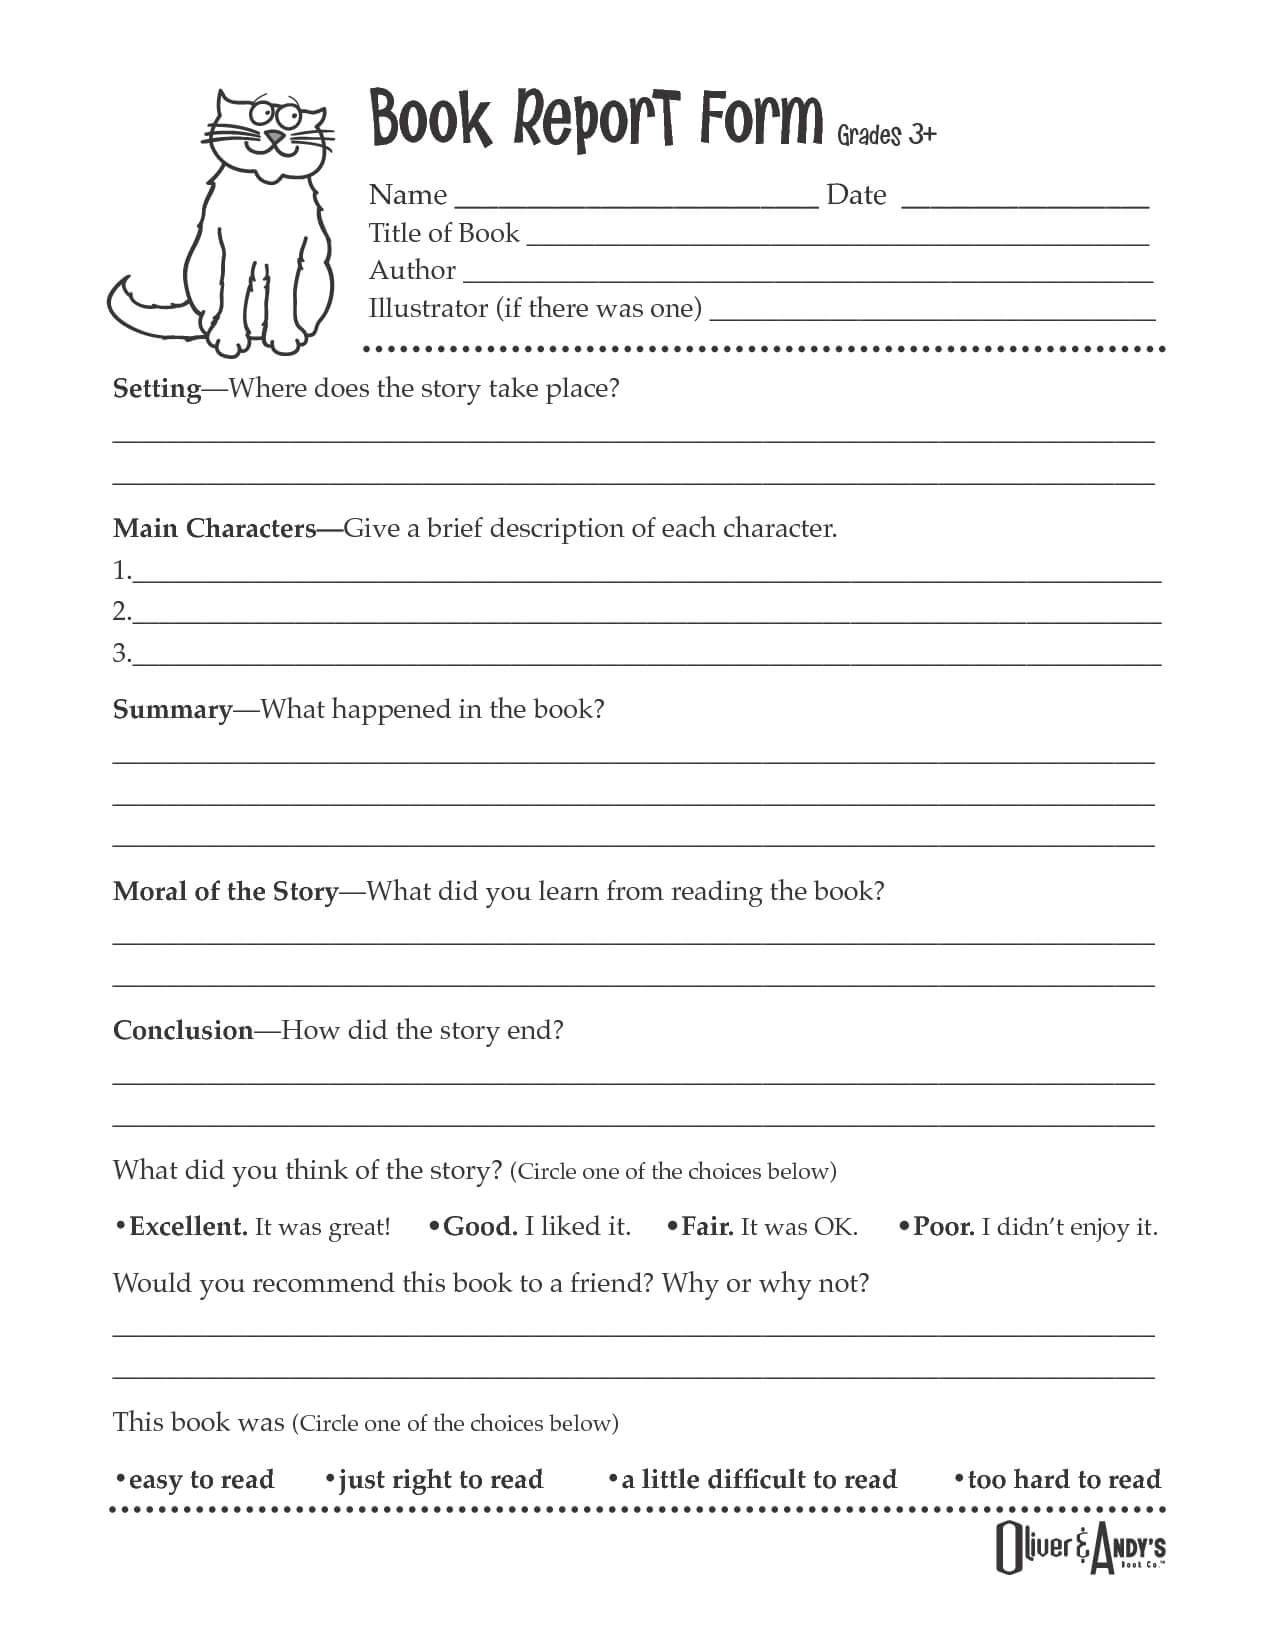 Second Grade Book Report Template | Book Report Form Grades In Book Report Template 5Th Grade